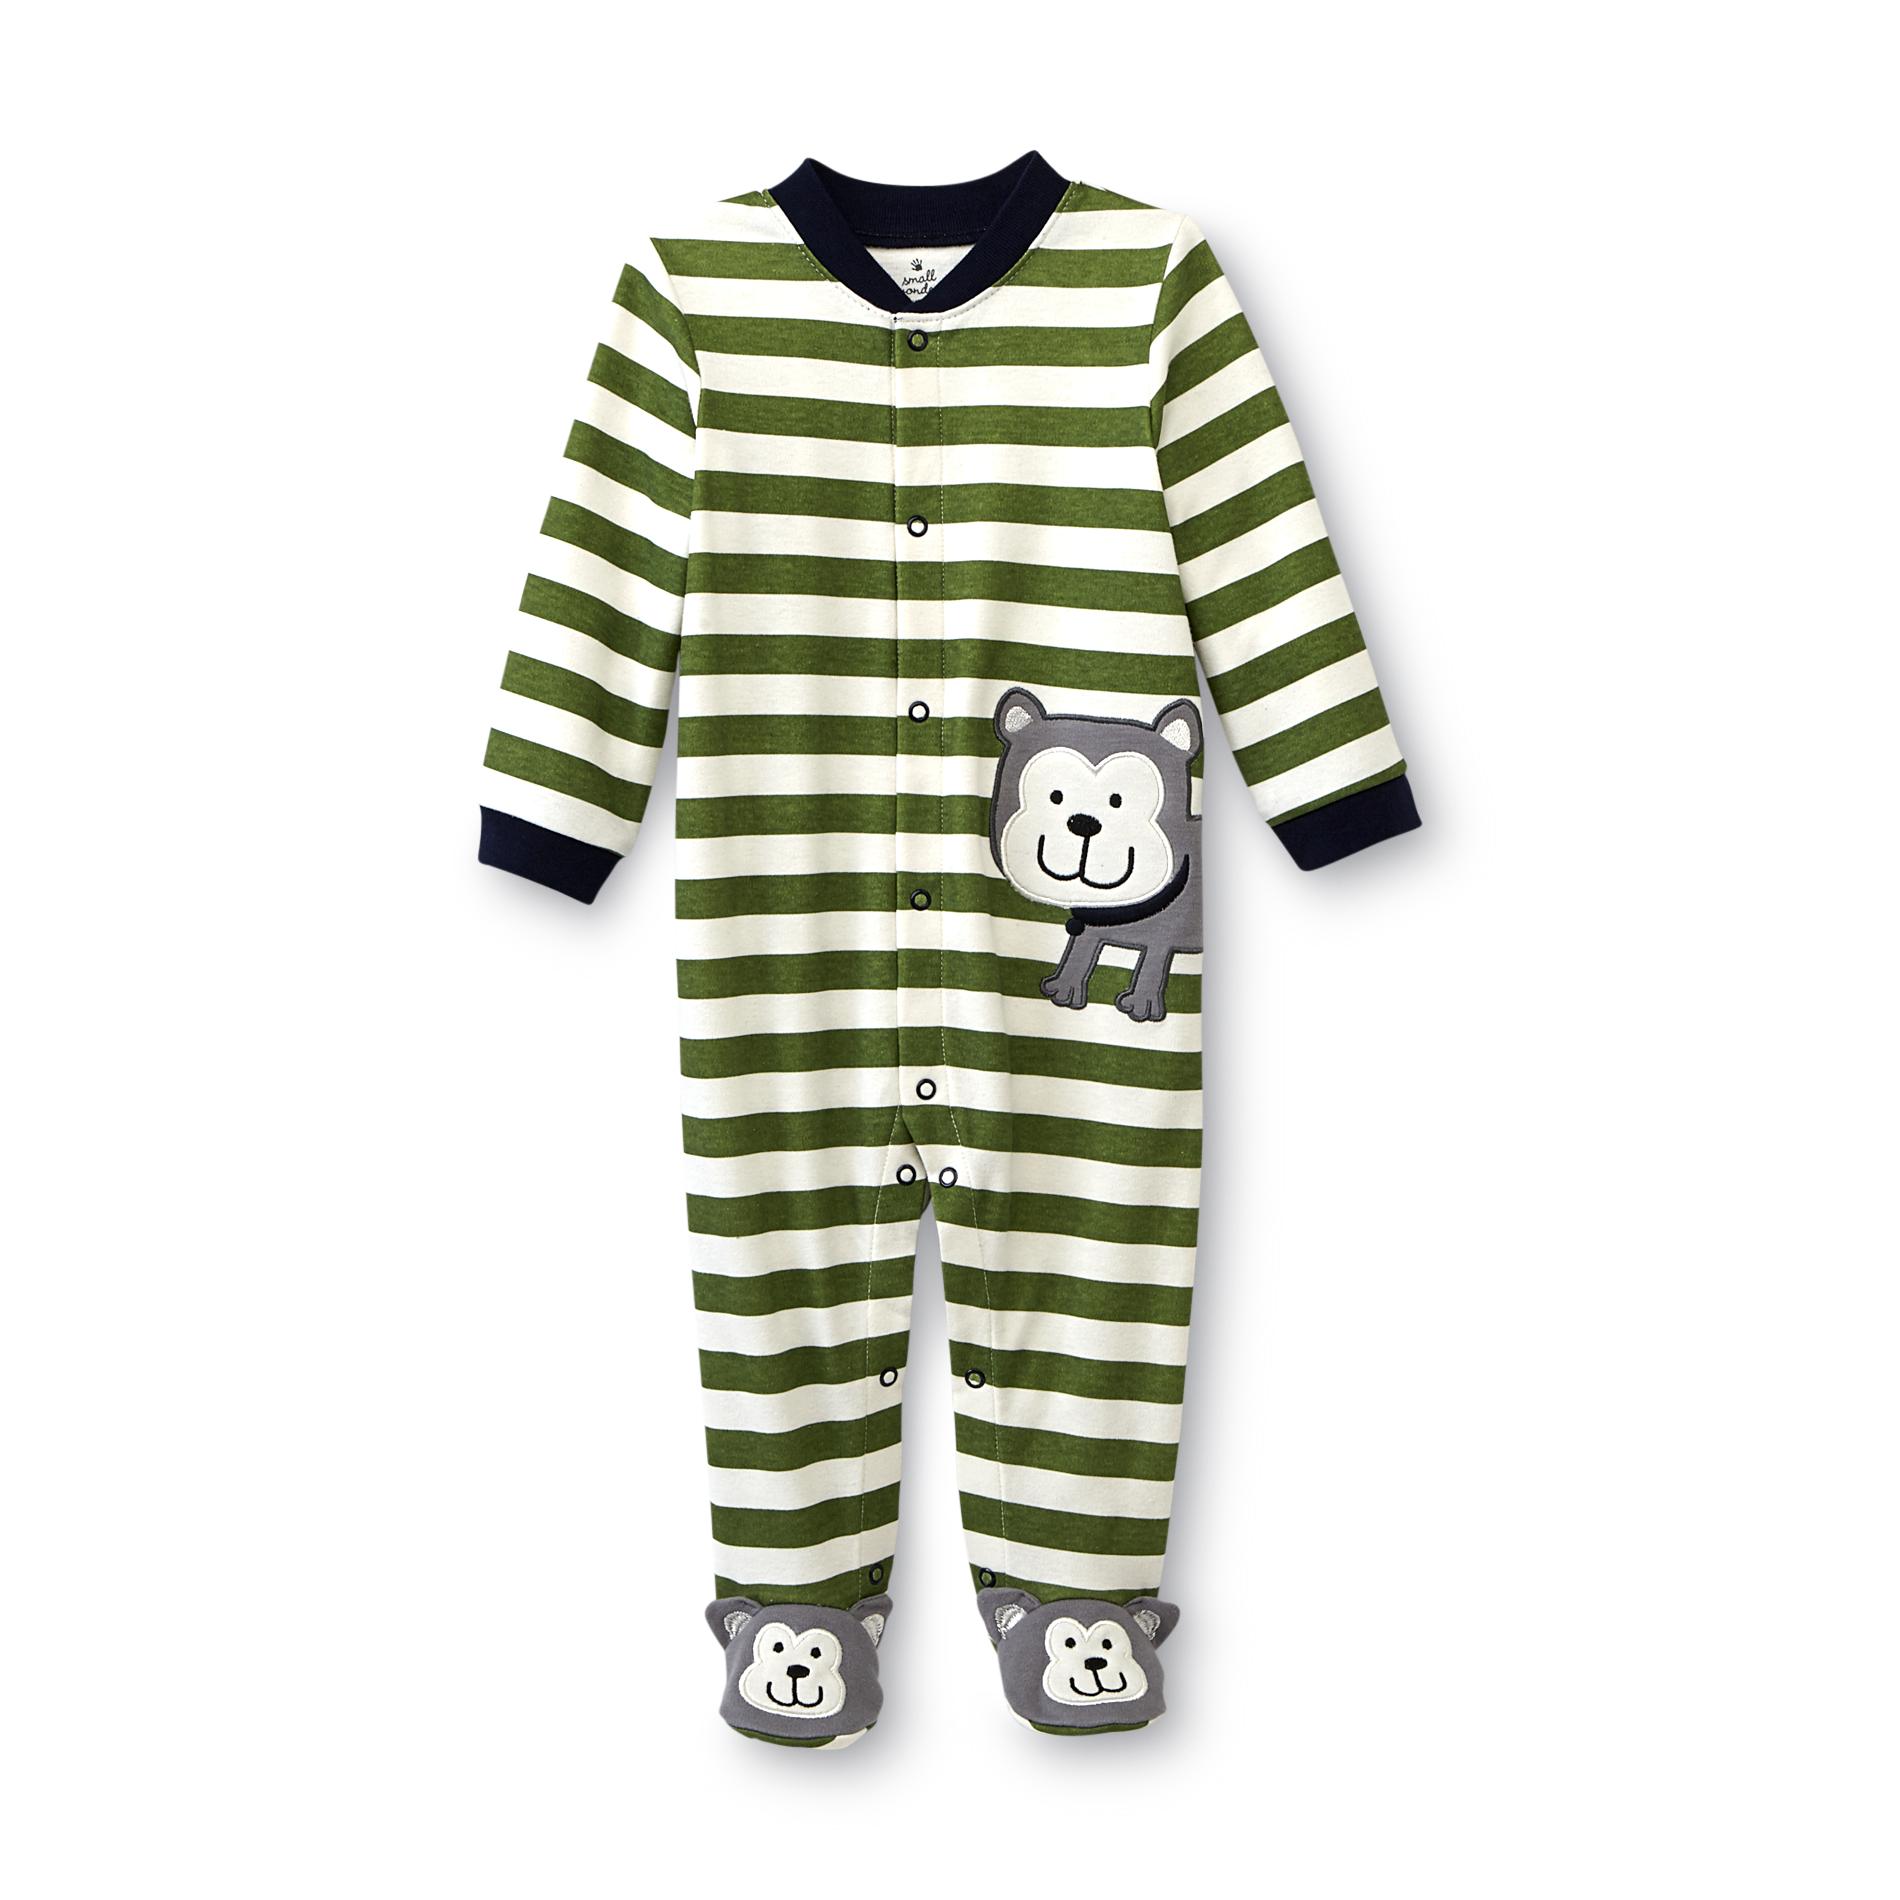 Small Wonders Newborn Boy's Footed Sleeper Pajamas - Dog & Striped